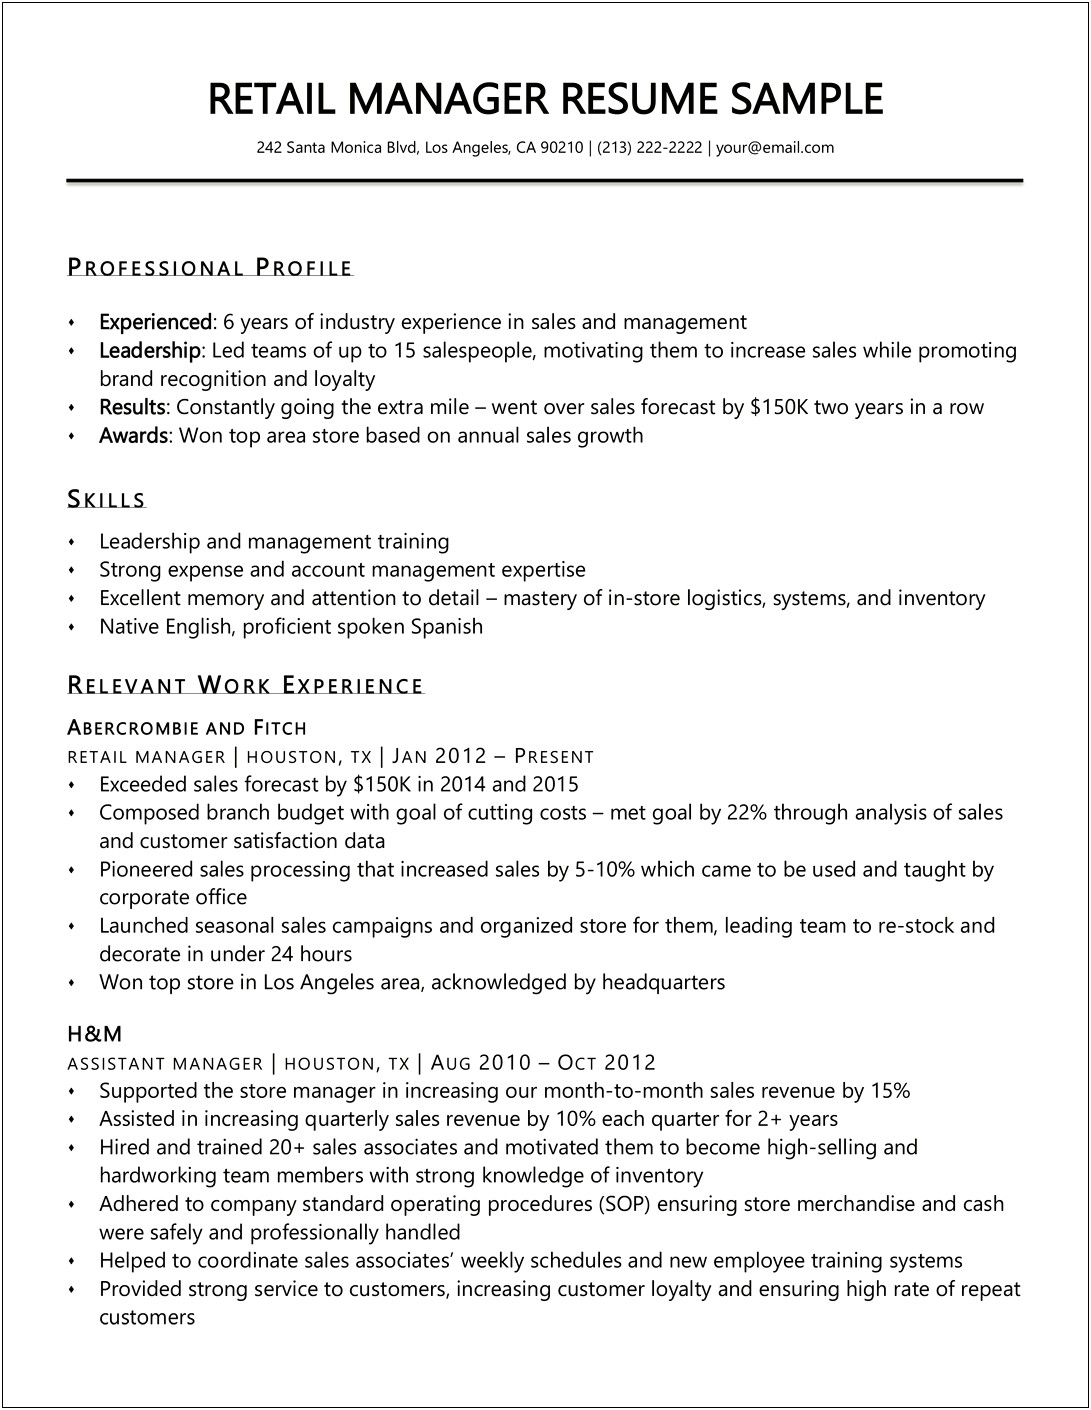 Best Resume Format For Retail Management